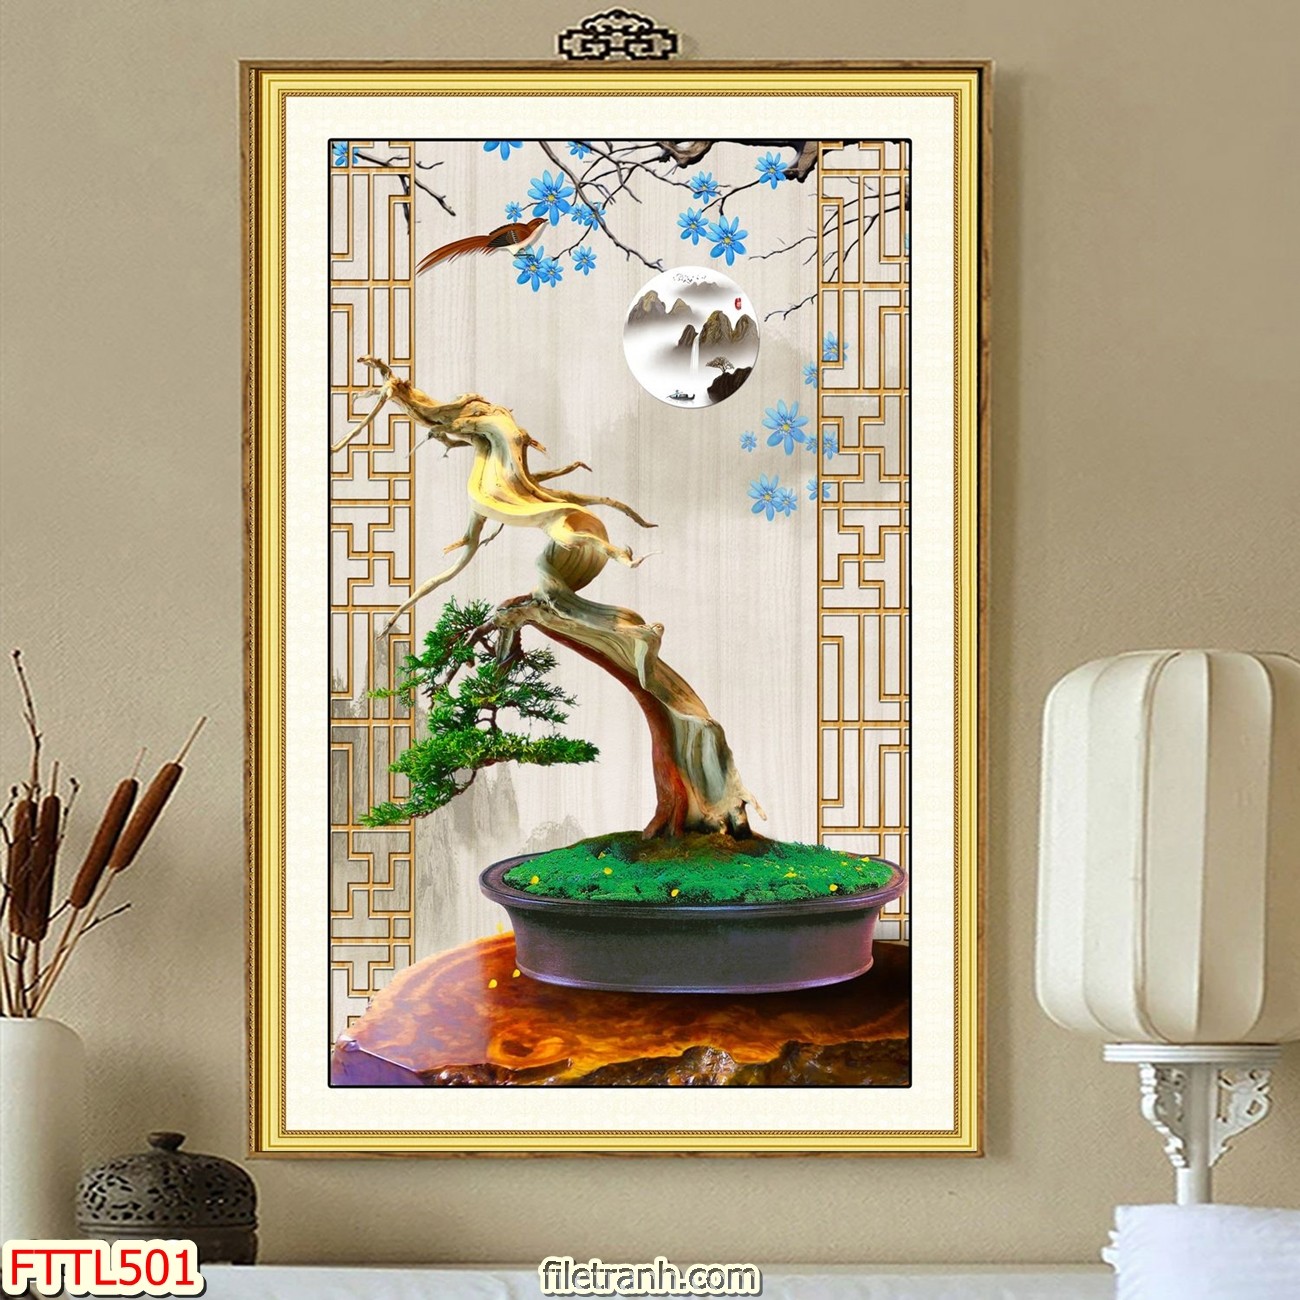 https://filetranh.com/file-tranh-chau-mai-bonsai/file-tranh-chau-mai-bonsai-fttl501.html